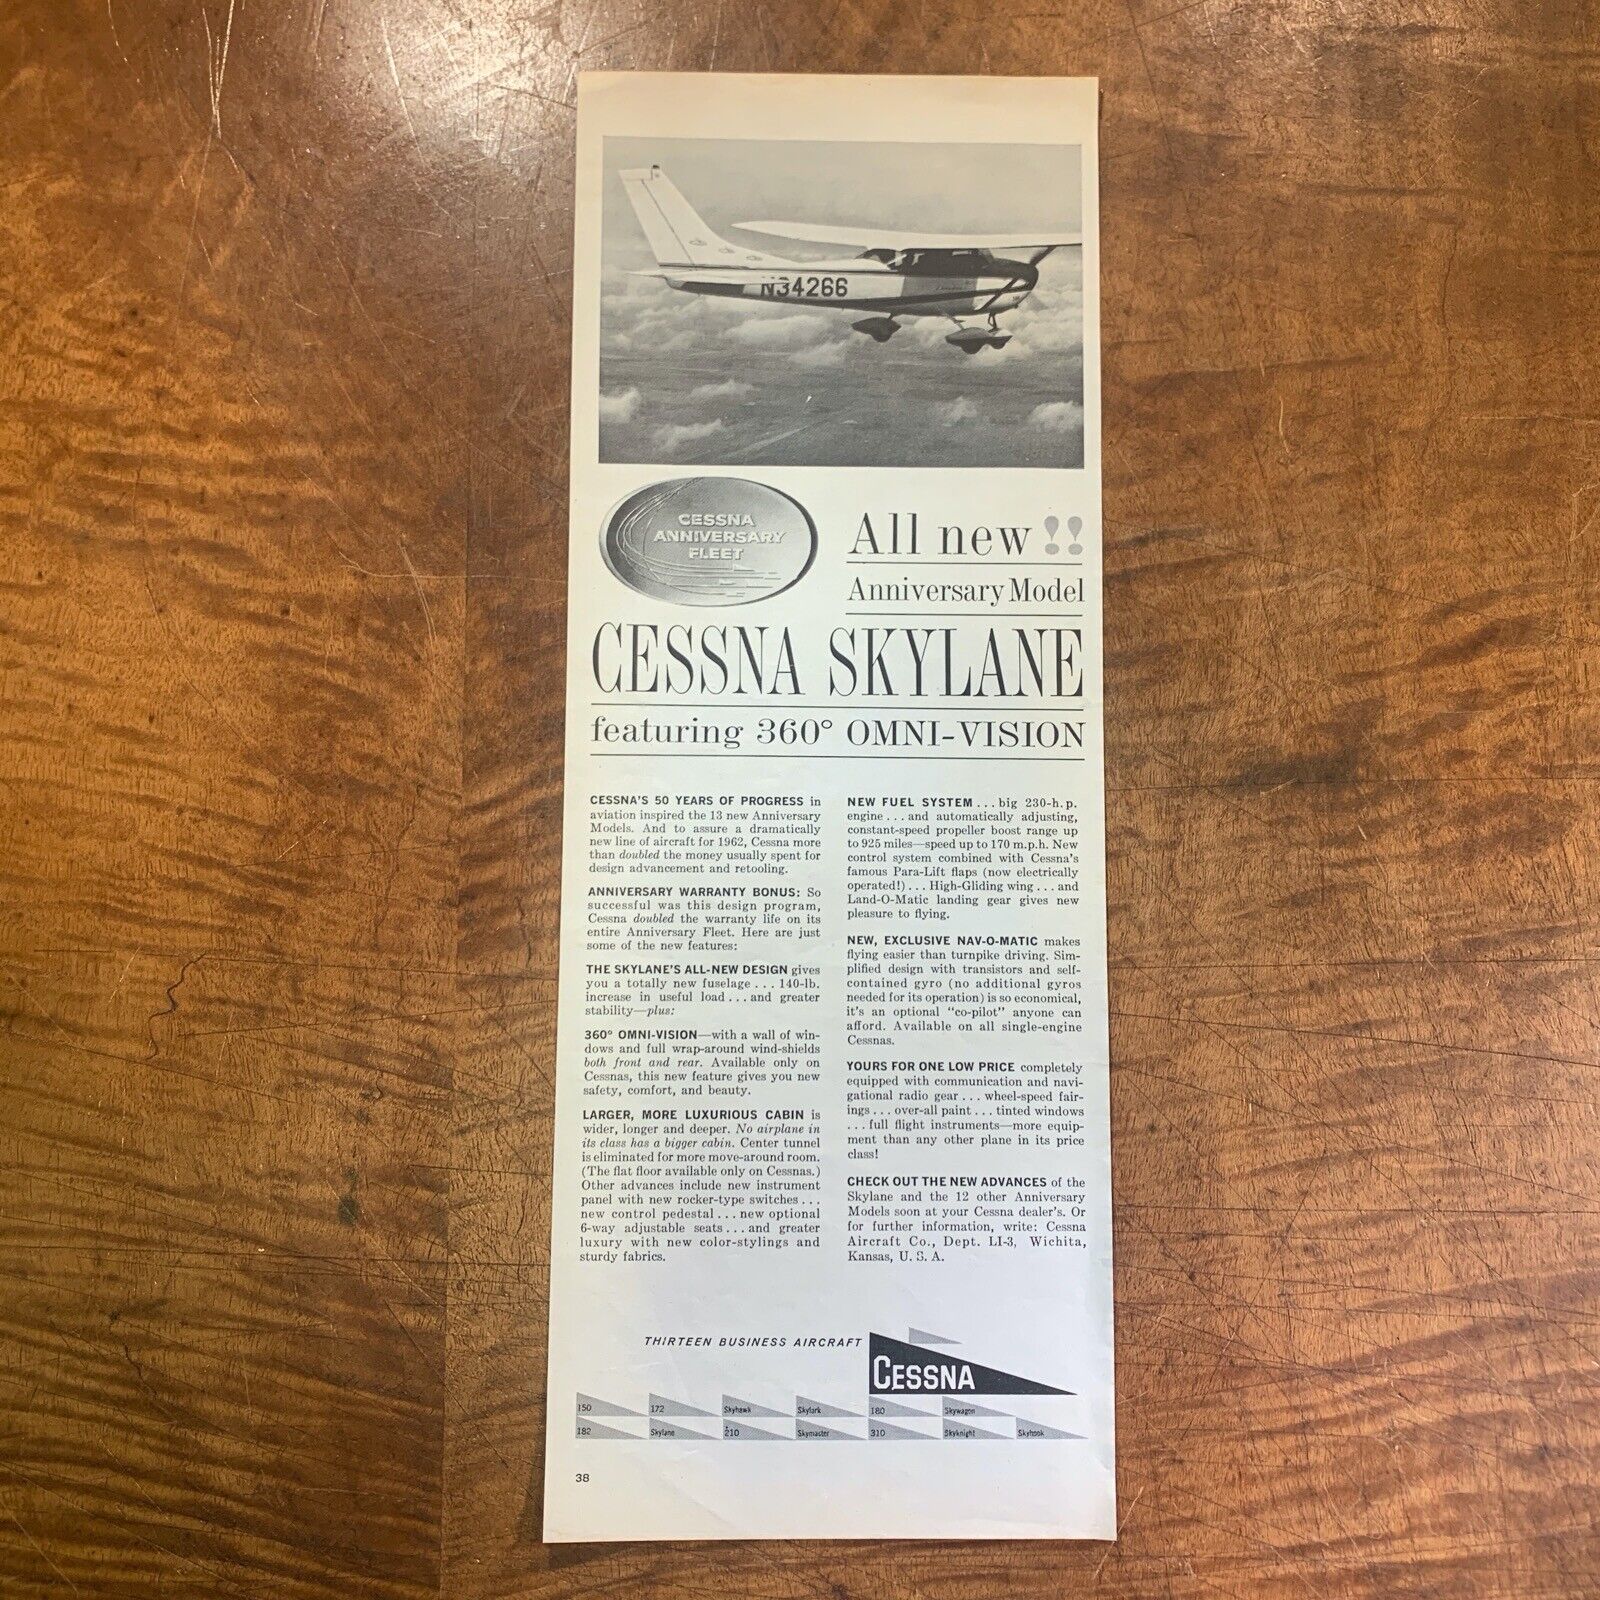 VINTAGE 1963 'CESSNA SKYLANE' AIRCRAFT MAGAZINE ADVERTISEMENT POSTER PRINT